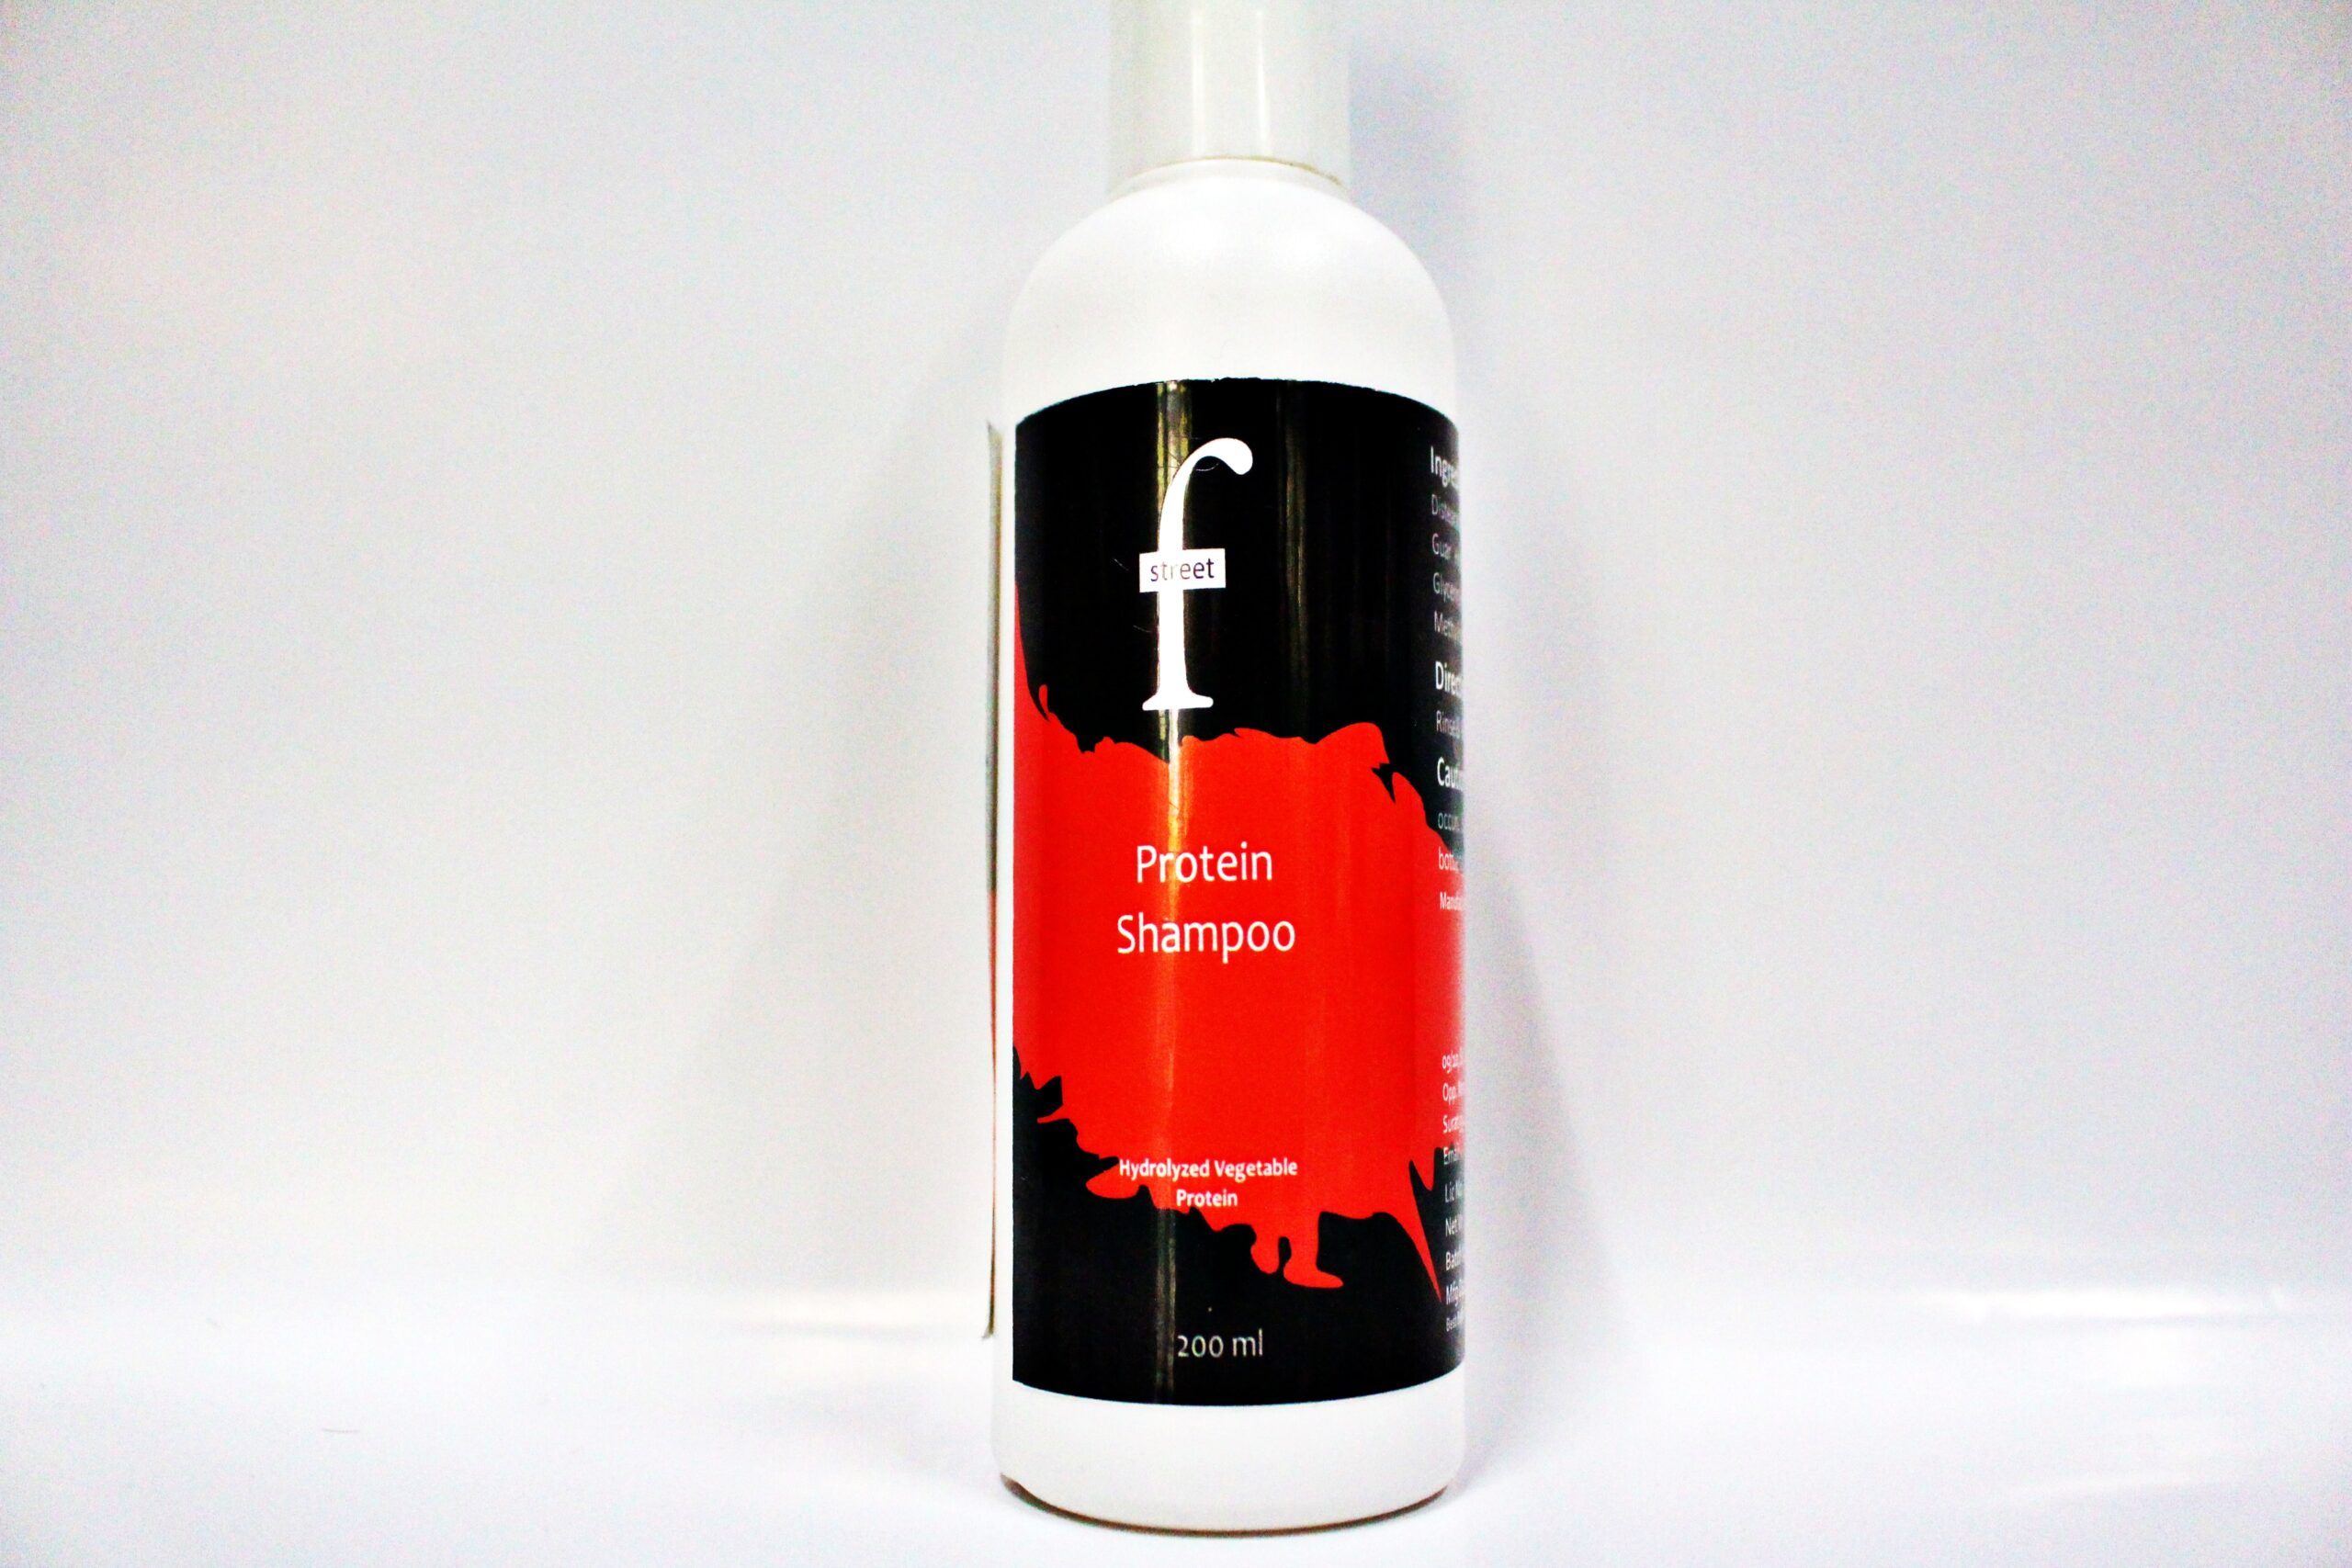 F-street-protein-shampoo-scaled-3.jpg